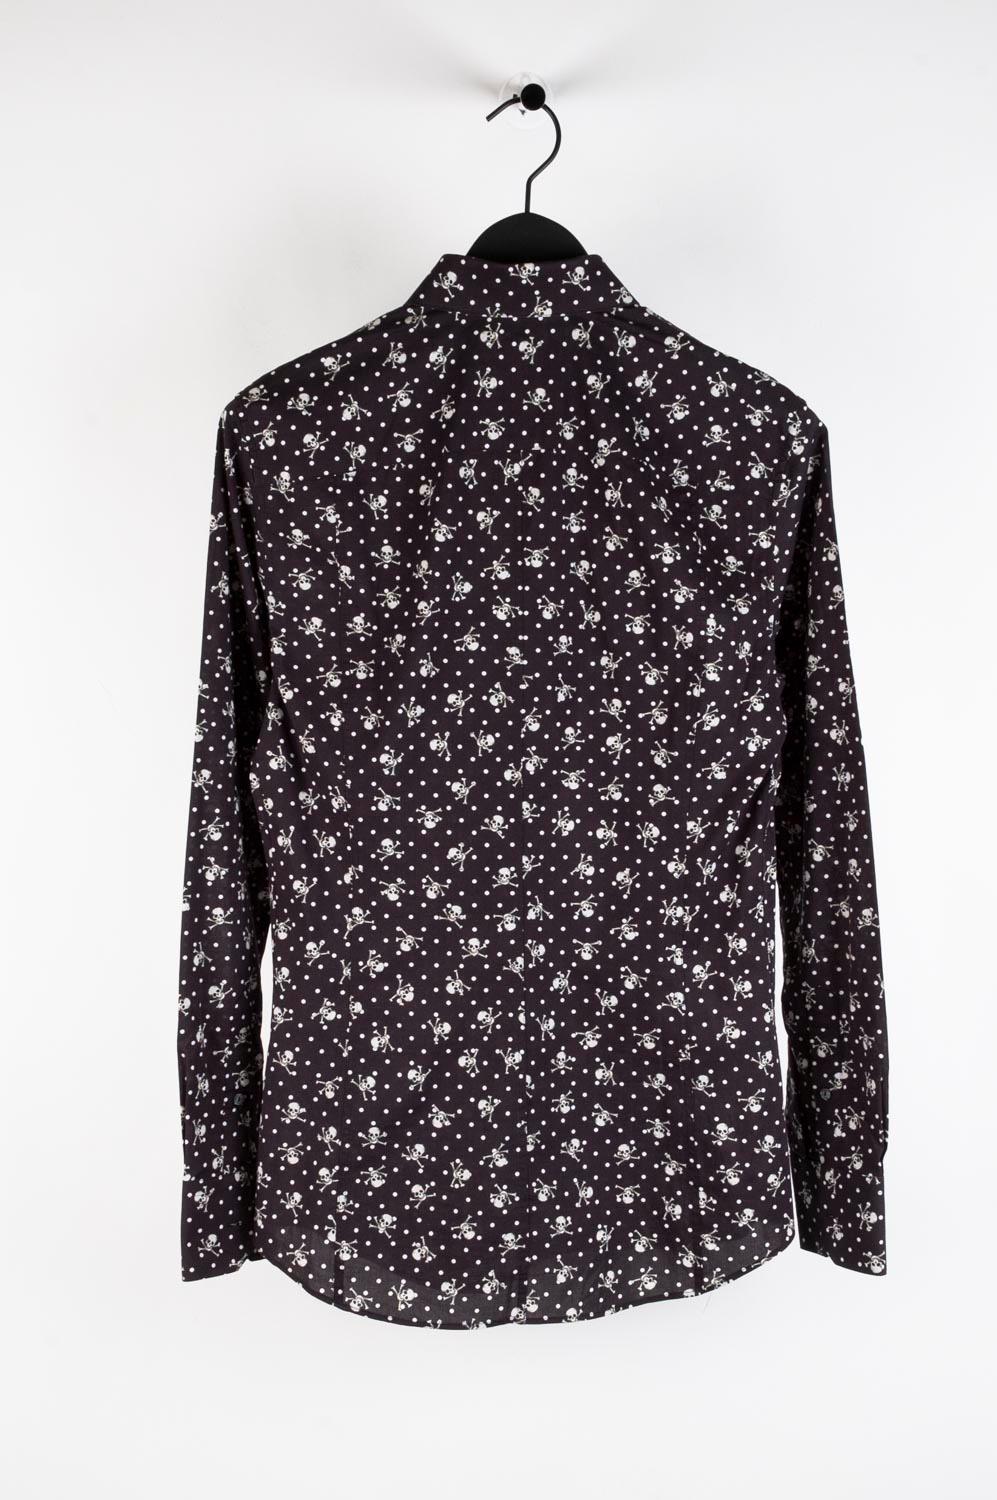 Dolce&Gabbana Skulls Print Men Shirt Size 15.75/40, (Medium), S436 For Sale 1